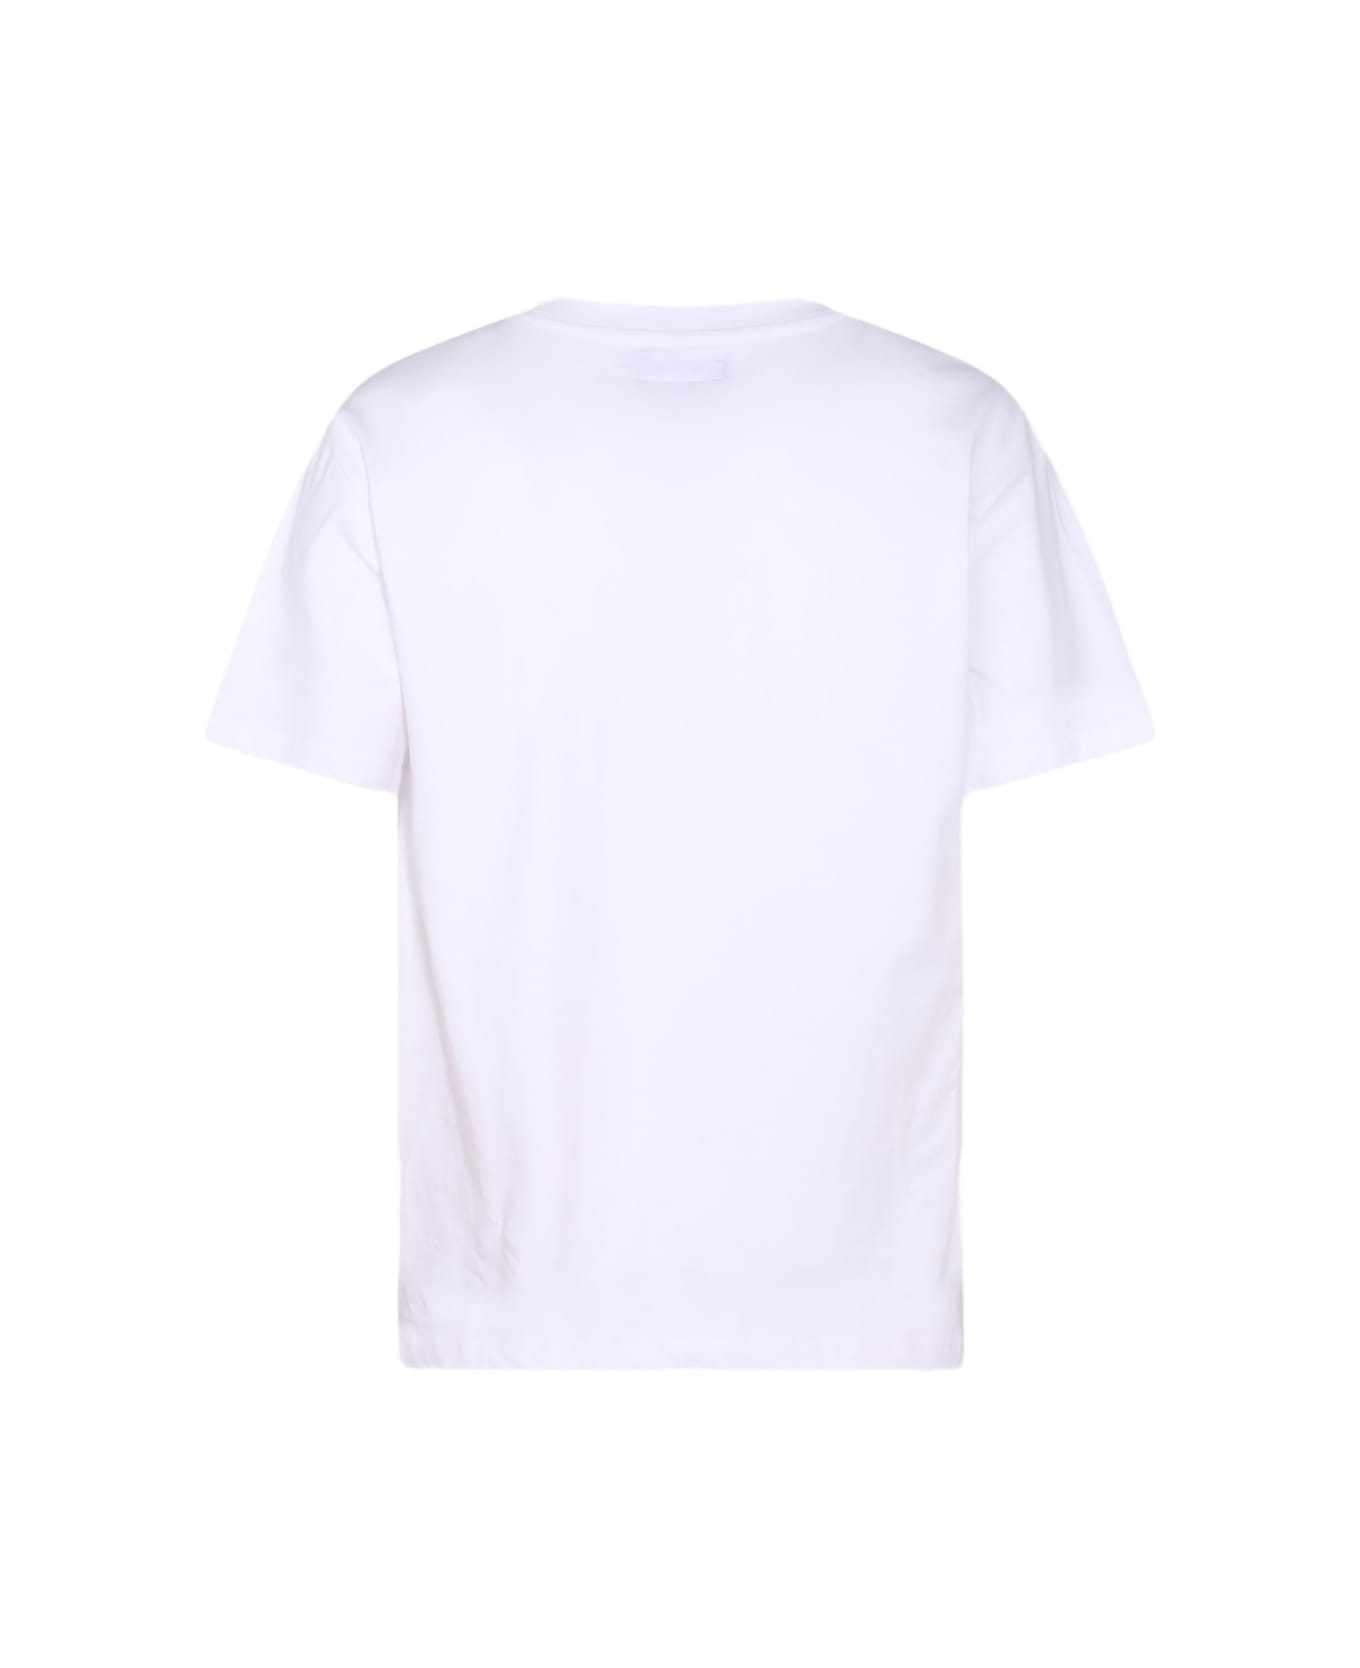 Market White Cotton T-shirt